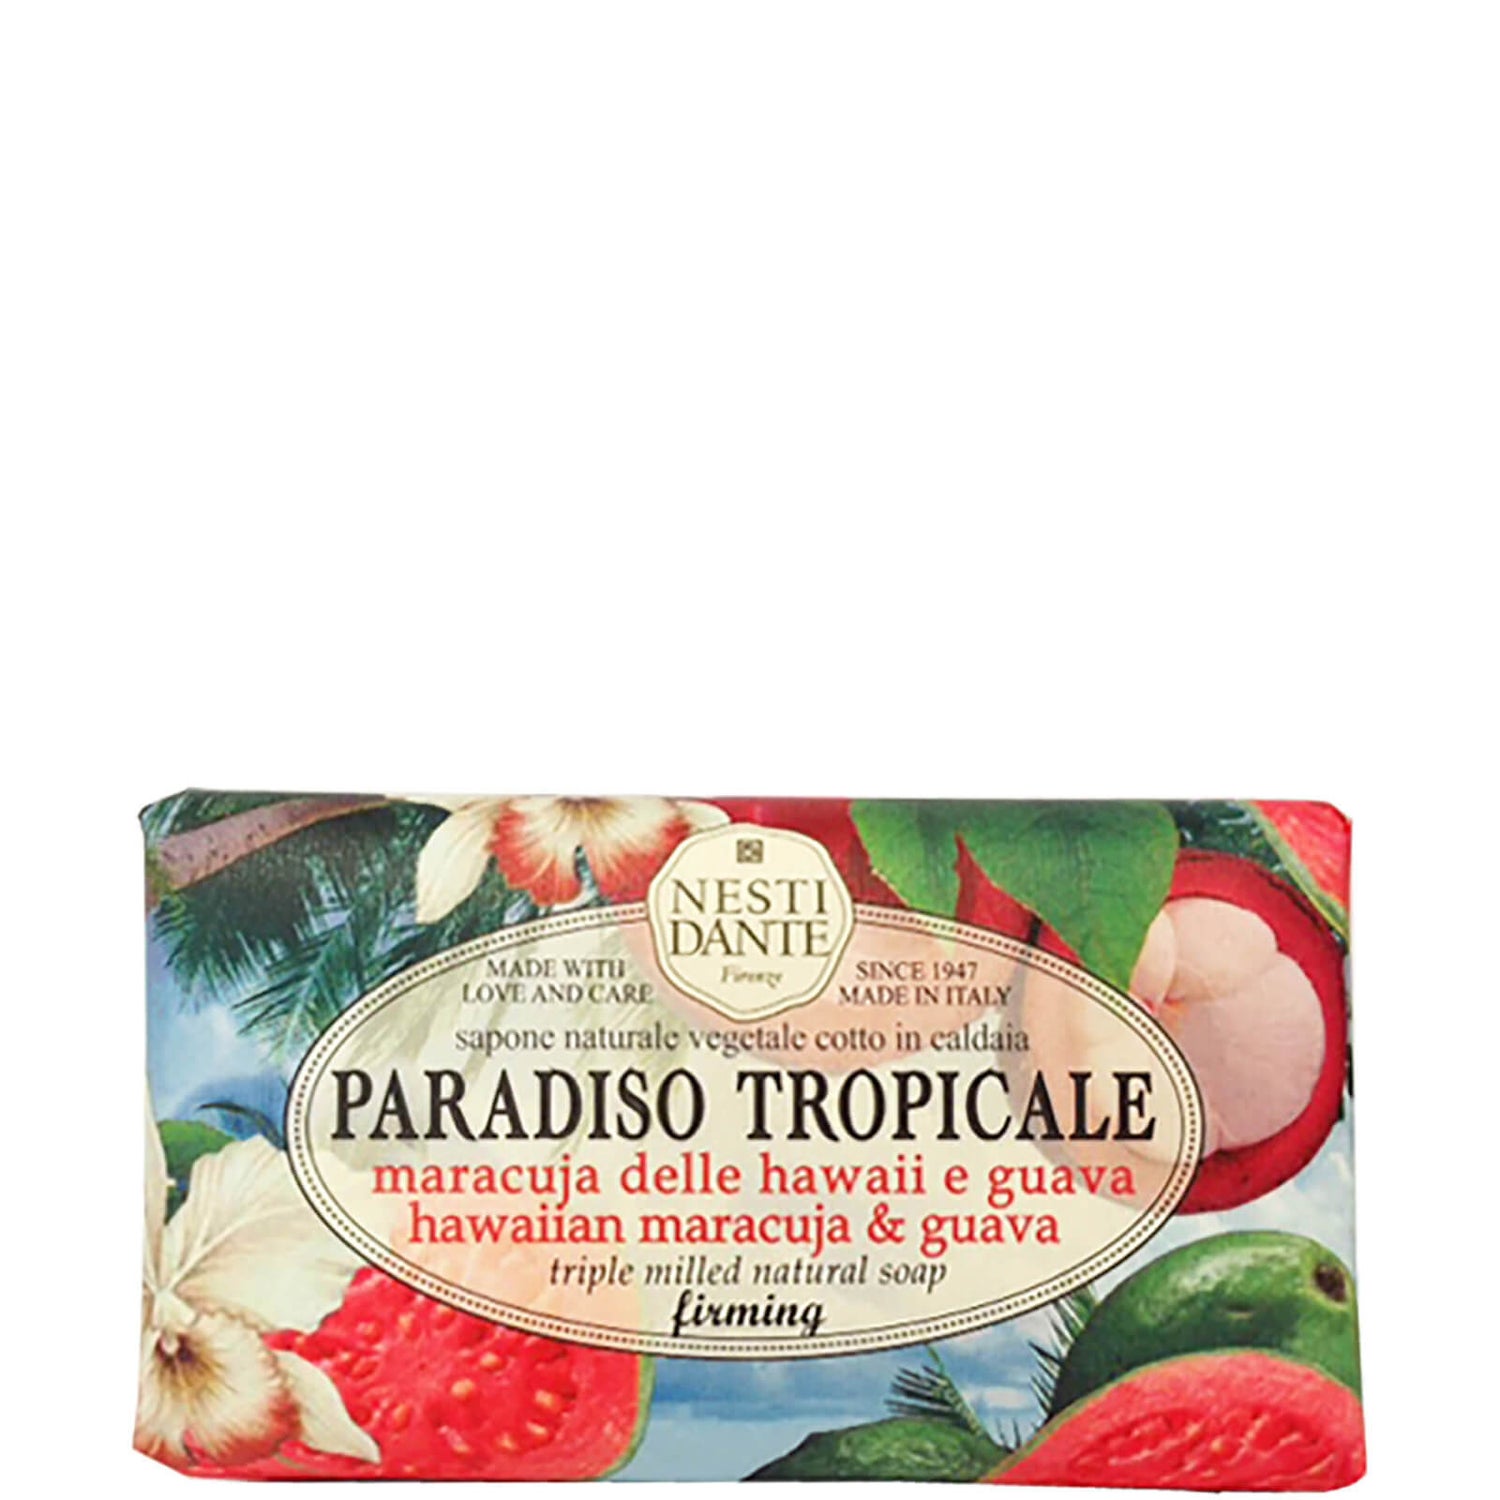 Nesti Dante Paradiso Tropicale Hawaiian Maracuja and Guava Soap 250 g